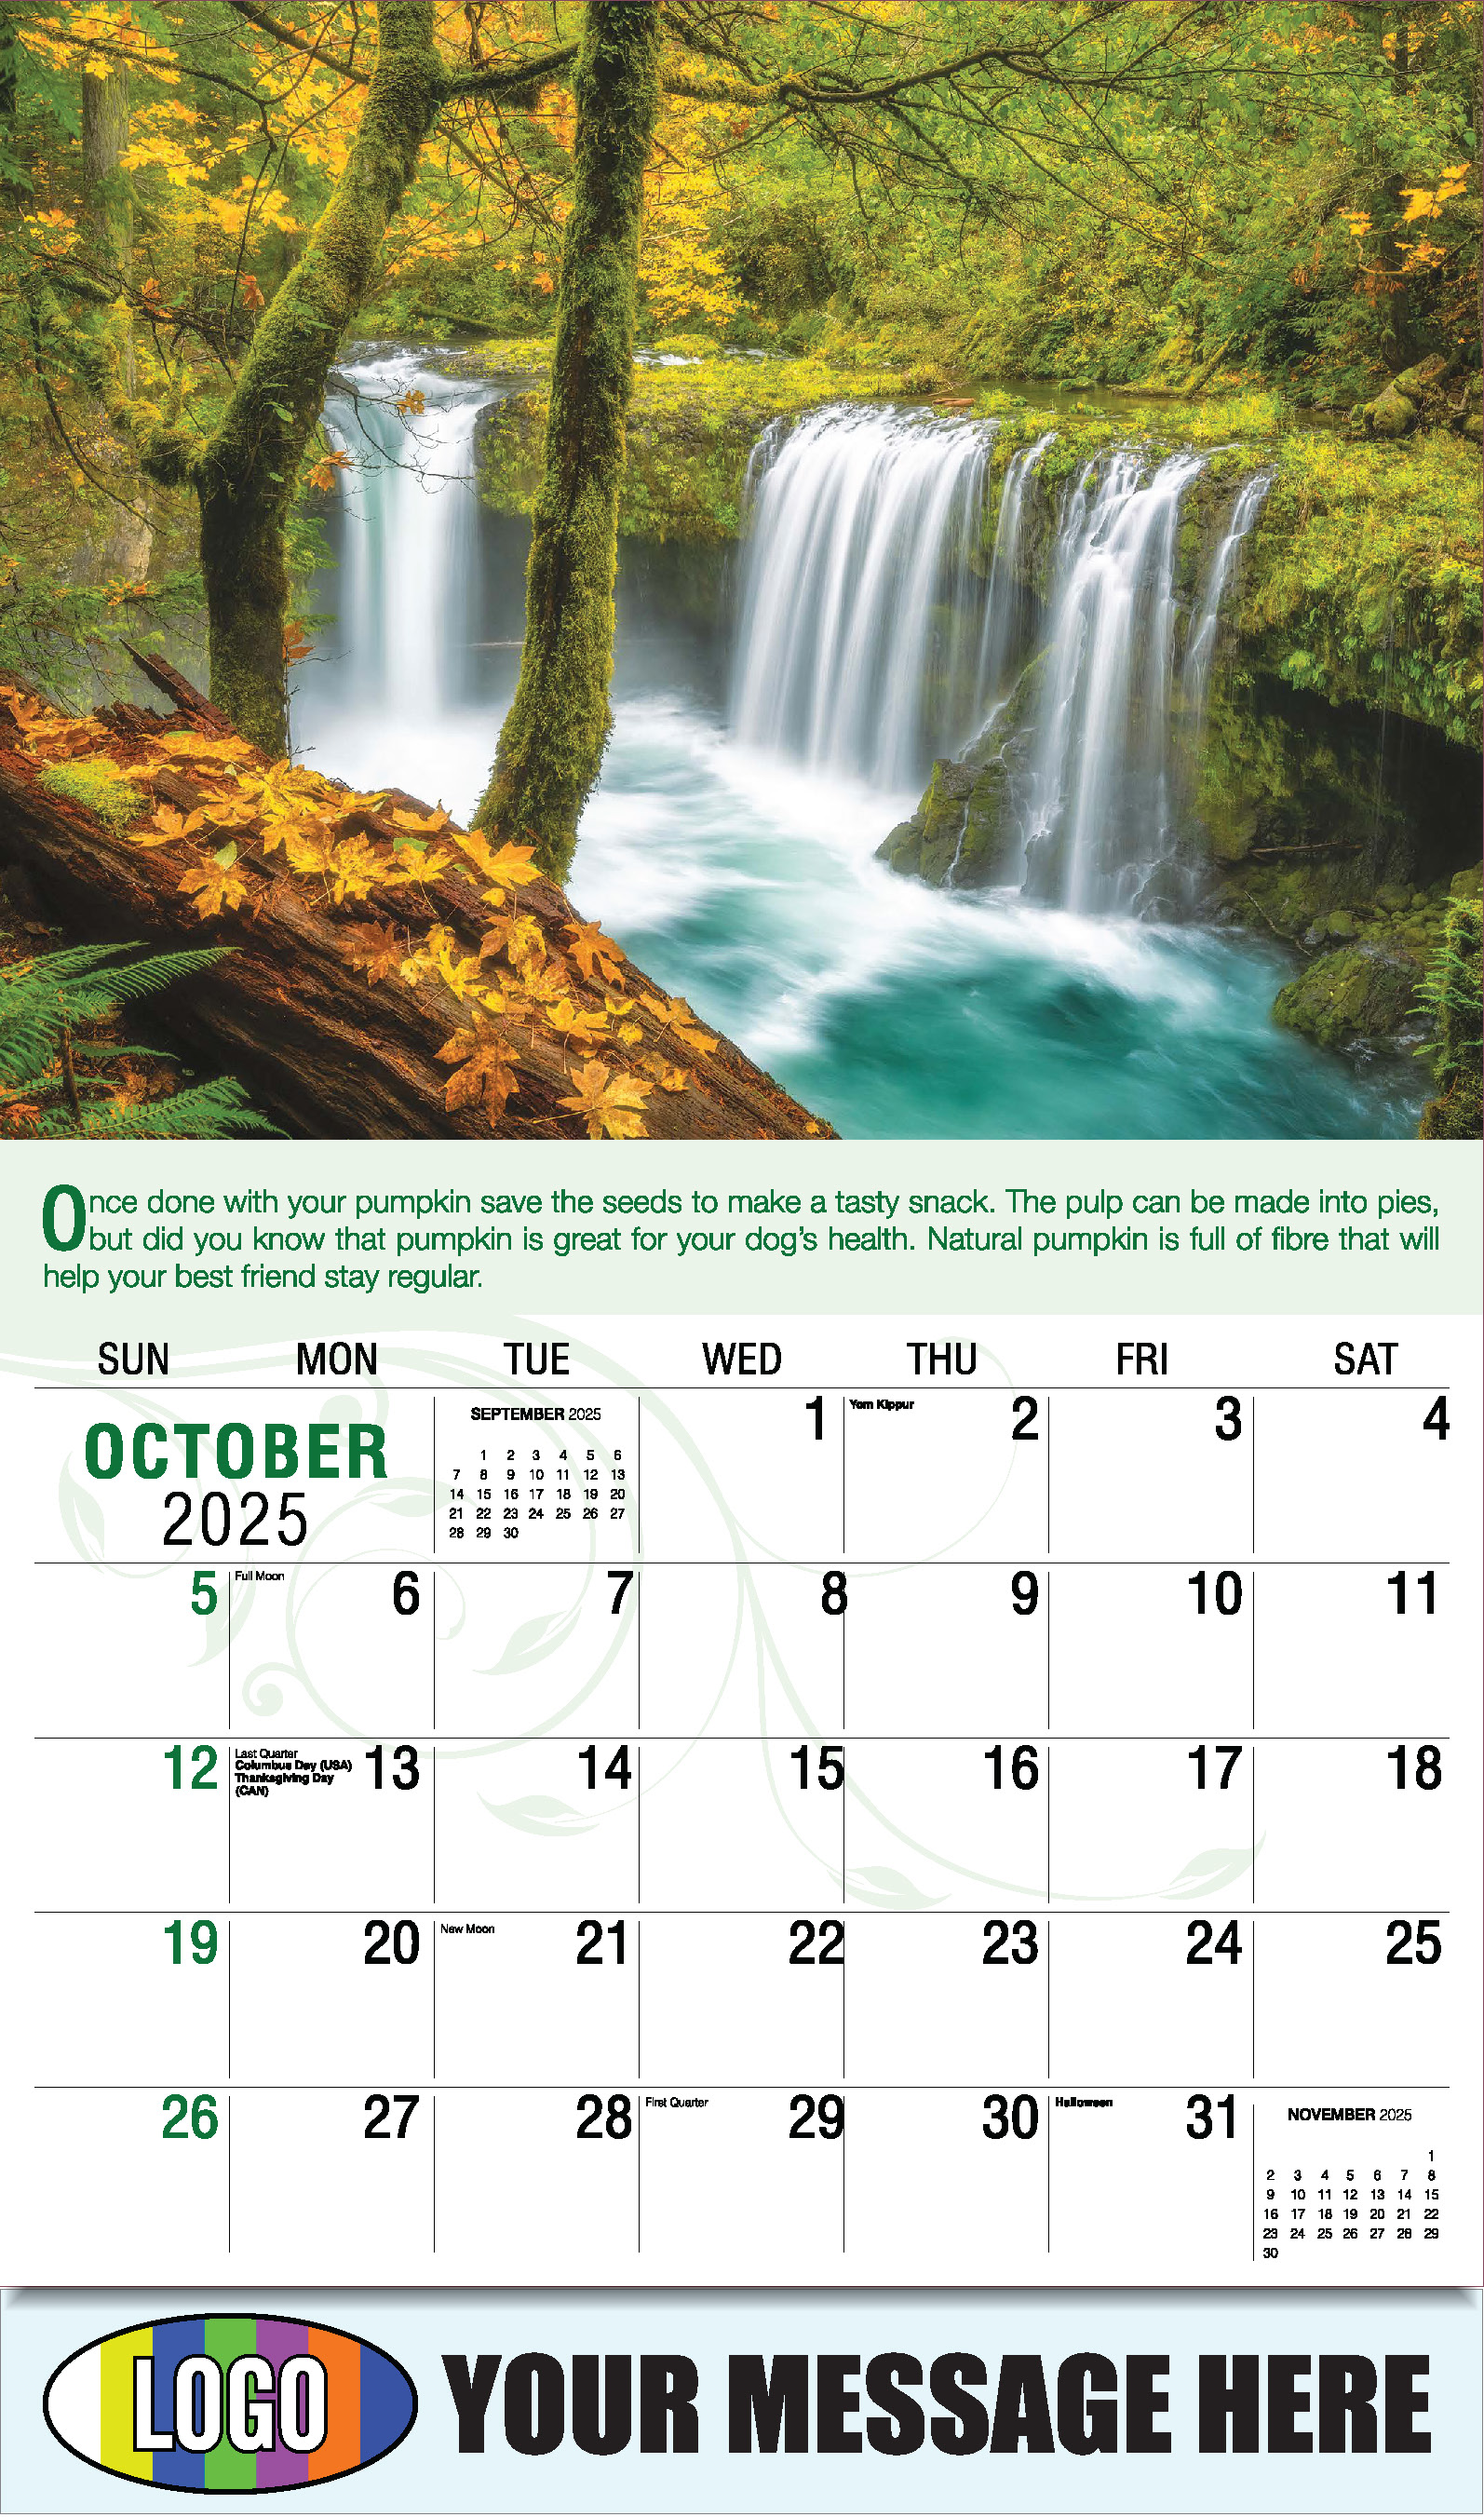 Go Green 2025 Business Promotion Calendar - October